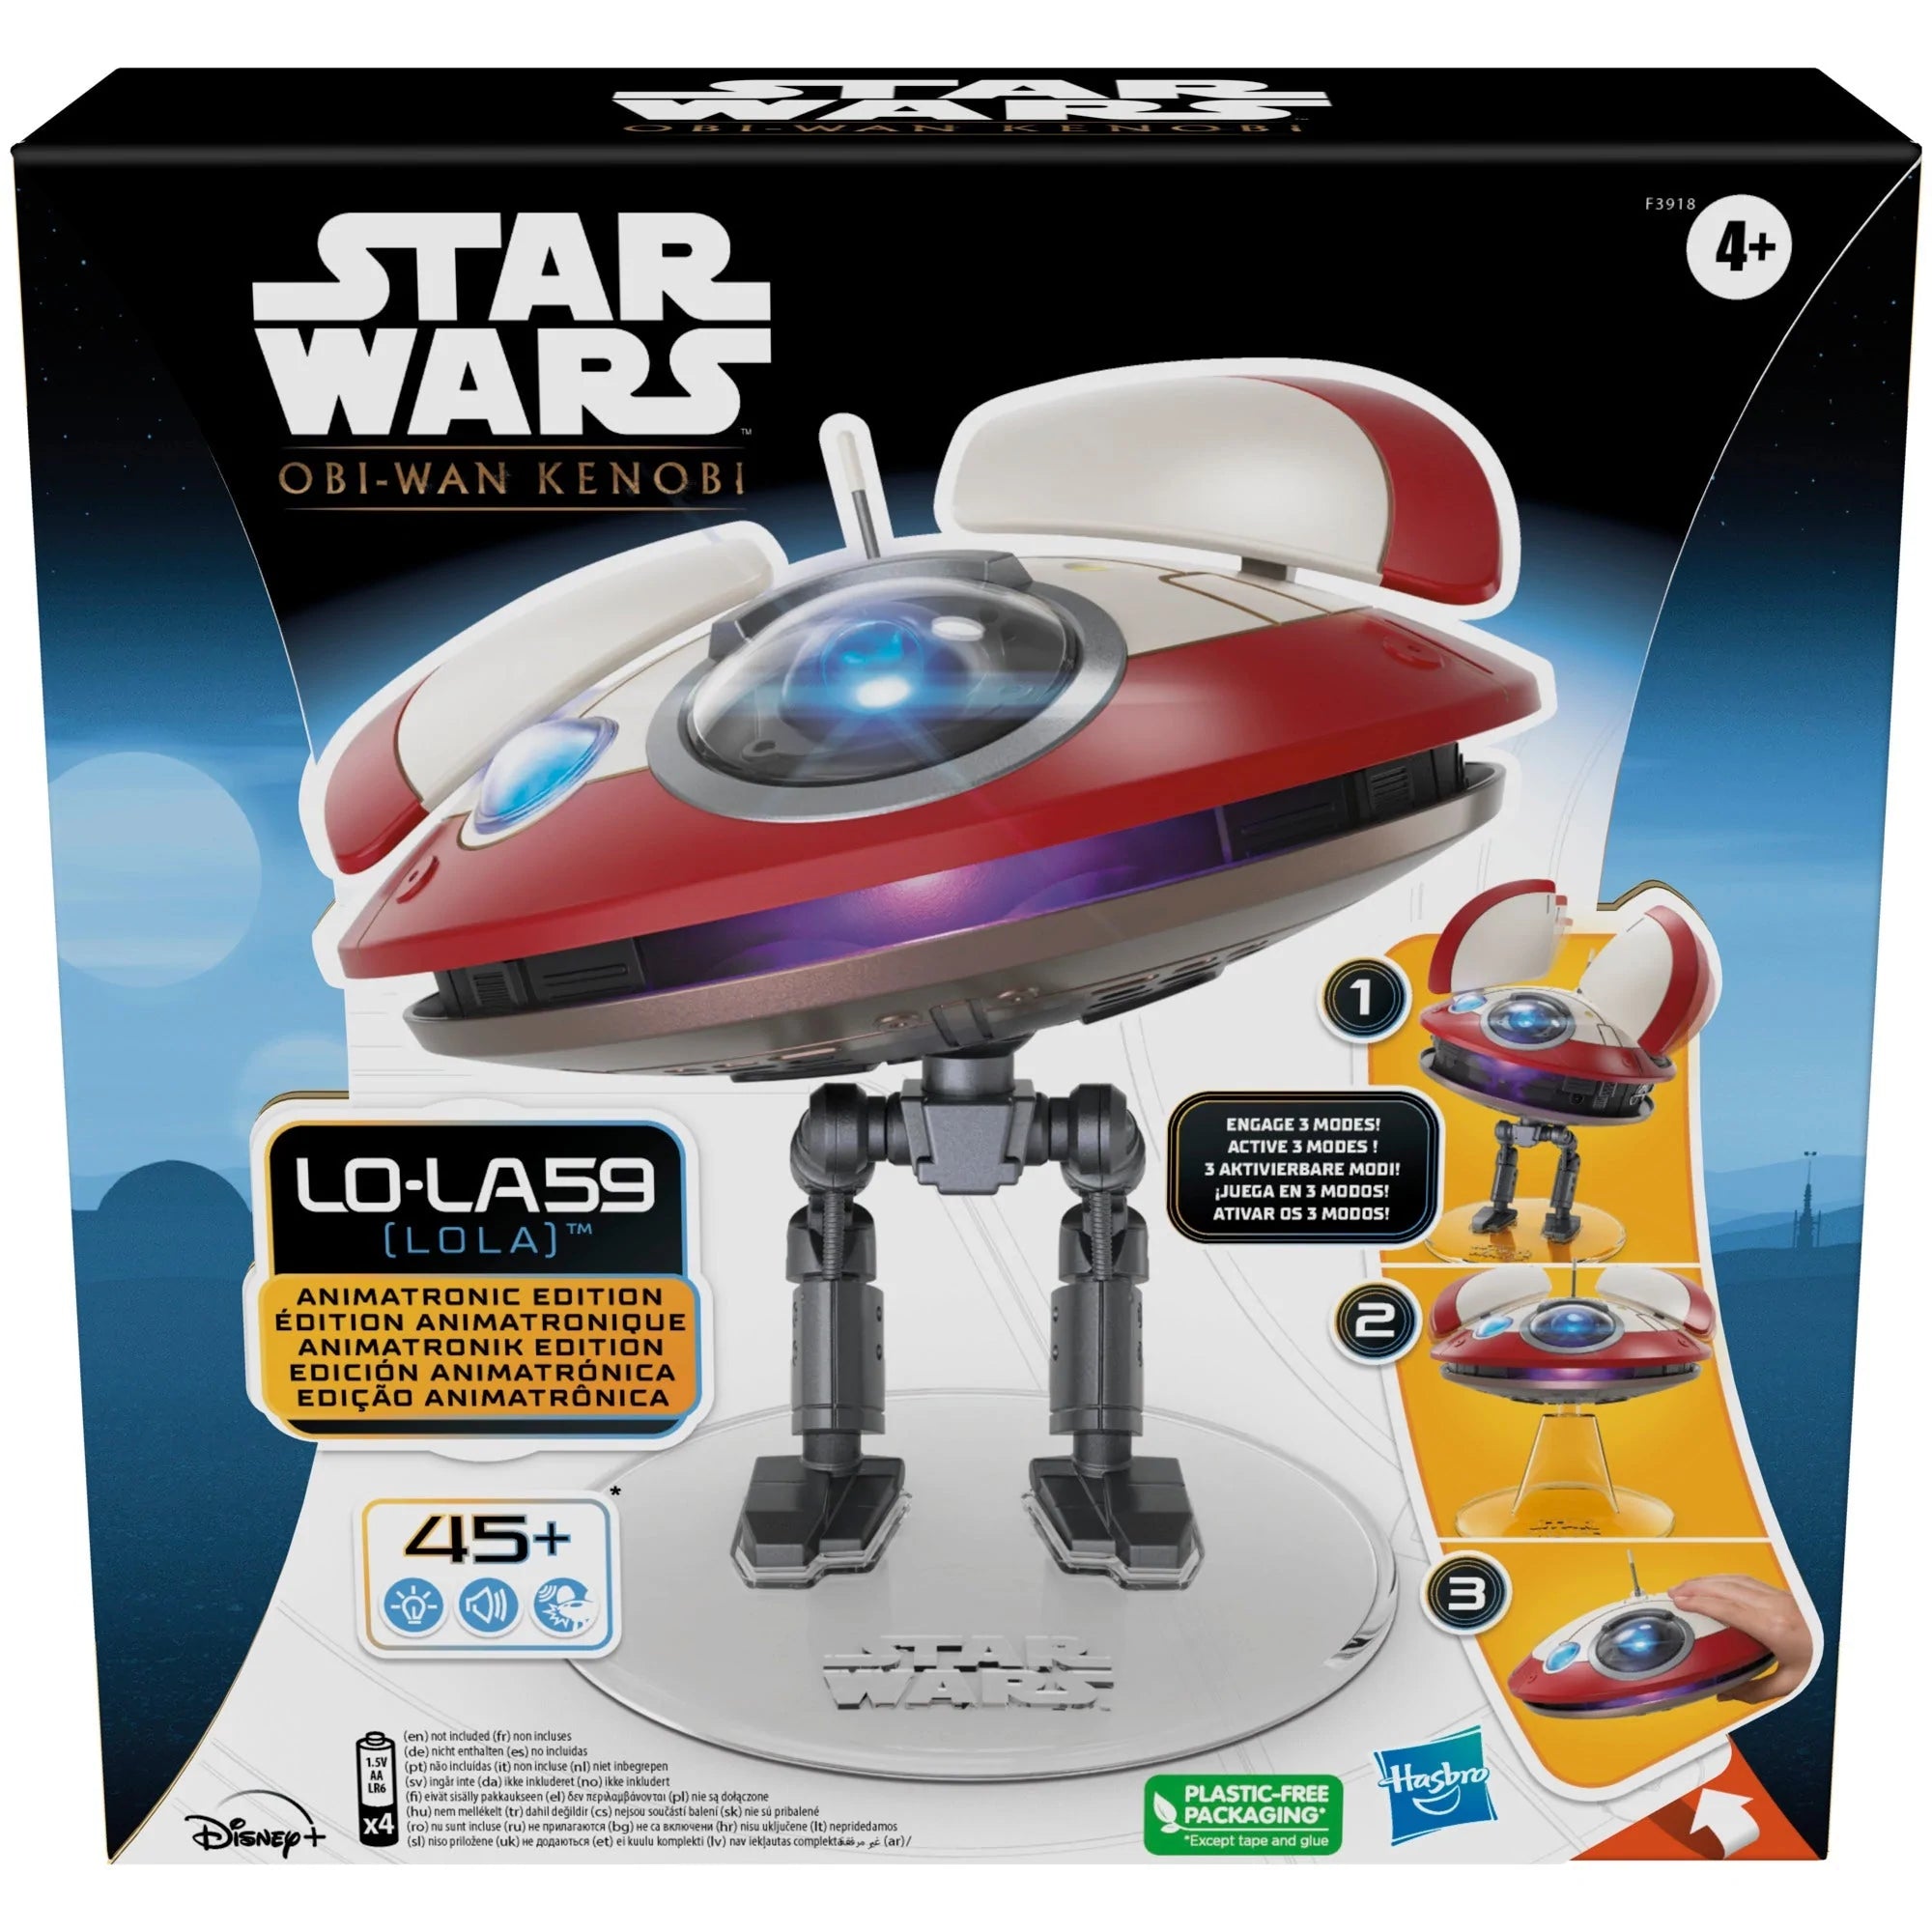 Hasbro - Star Wars - L0-La59 (Lola) Animatronic Edition